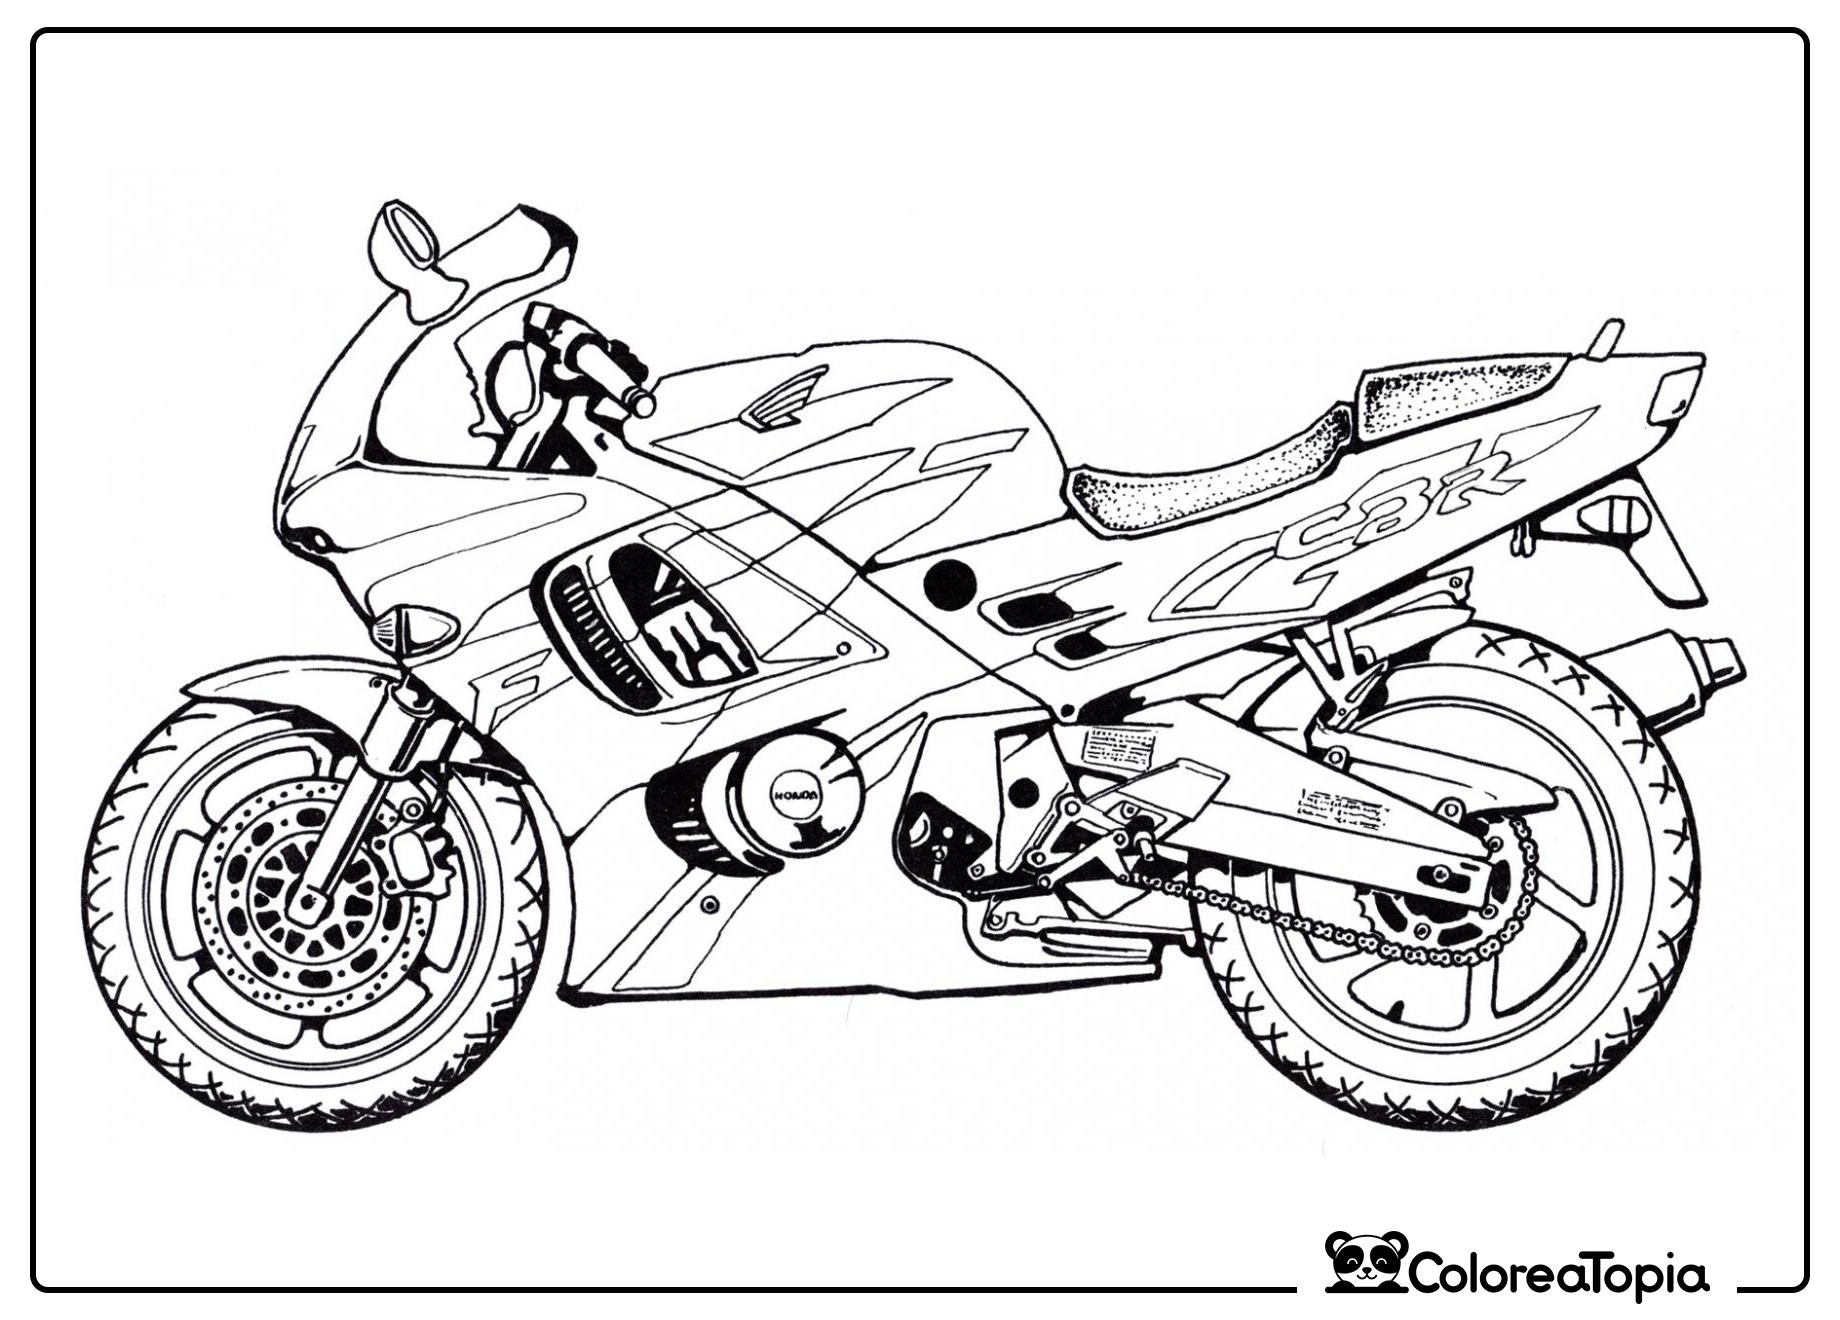 Motocicleta deportiva Honda - dibujo para colorear